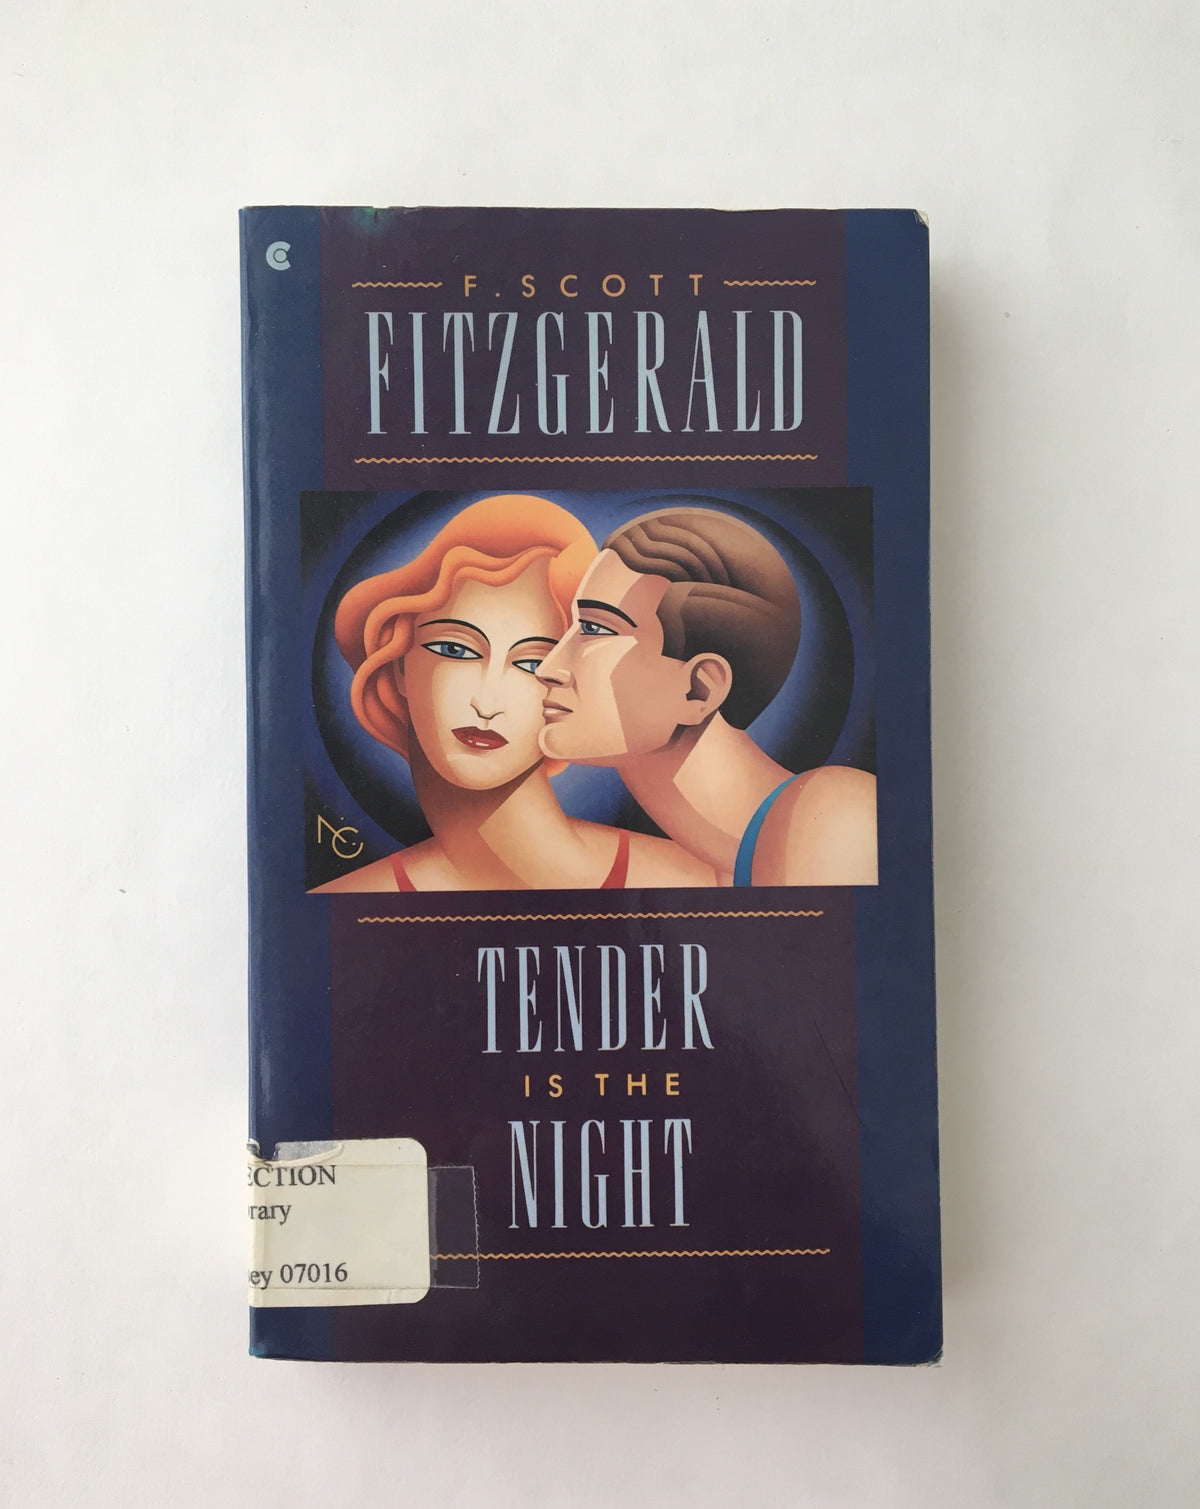 Tender is the Night by F. Scott Fitzgerald